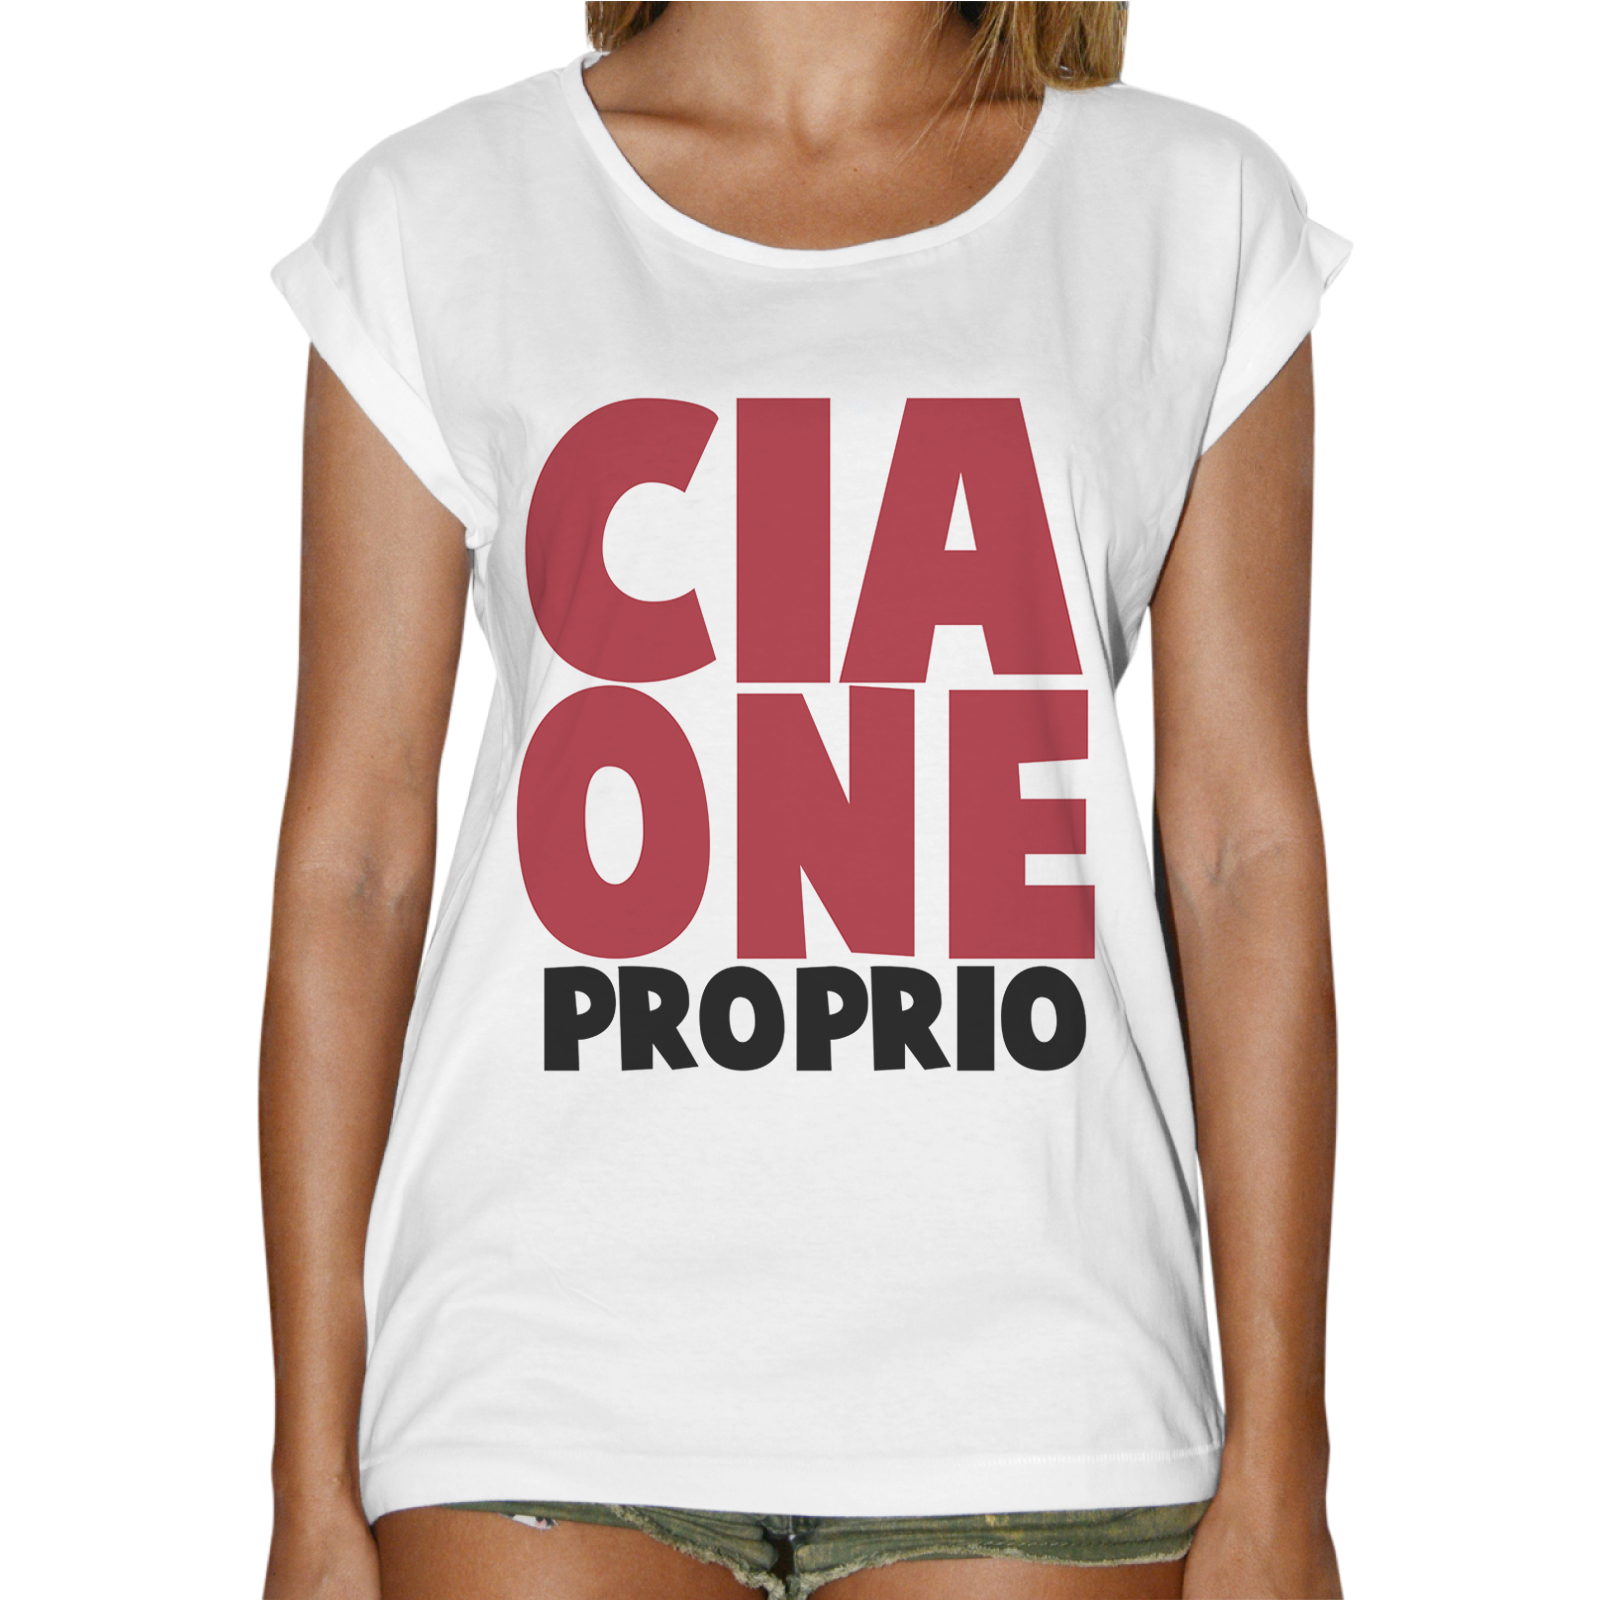 T-Shirt Donna Fashion CIAONE PROPRIO